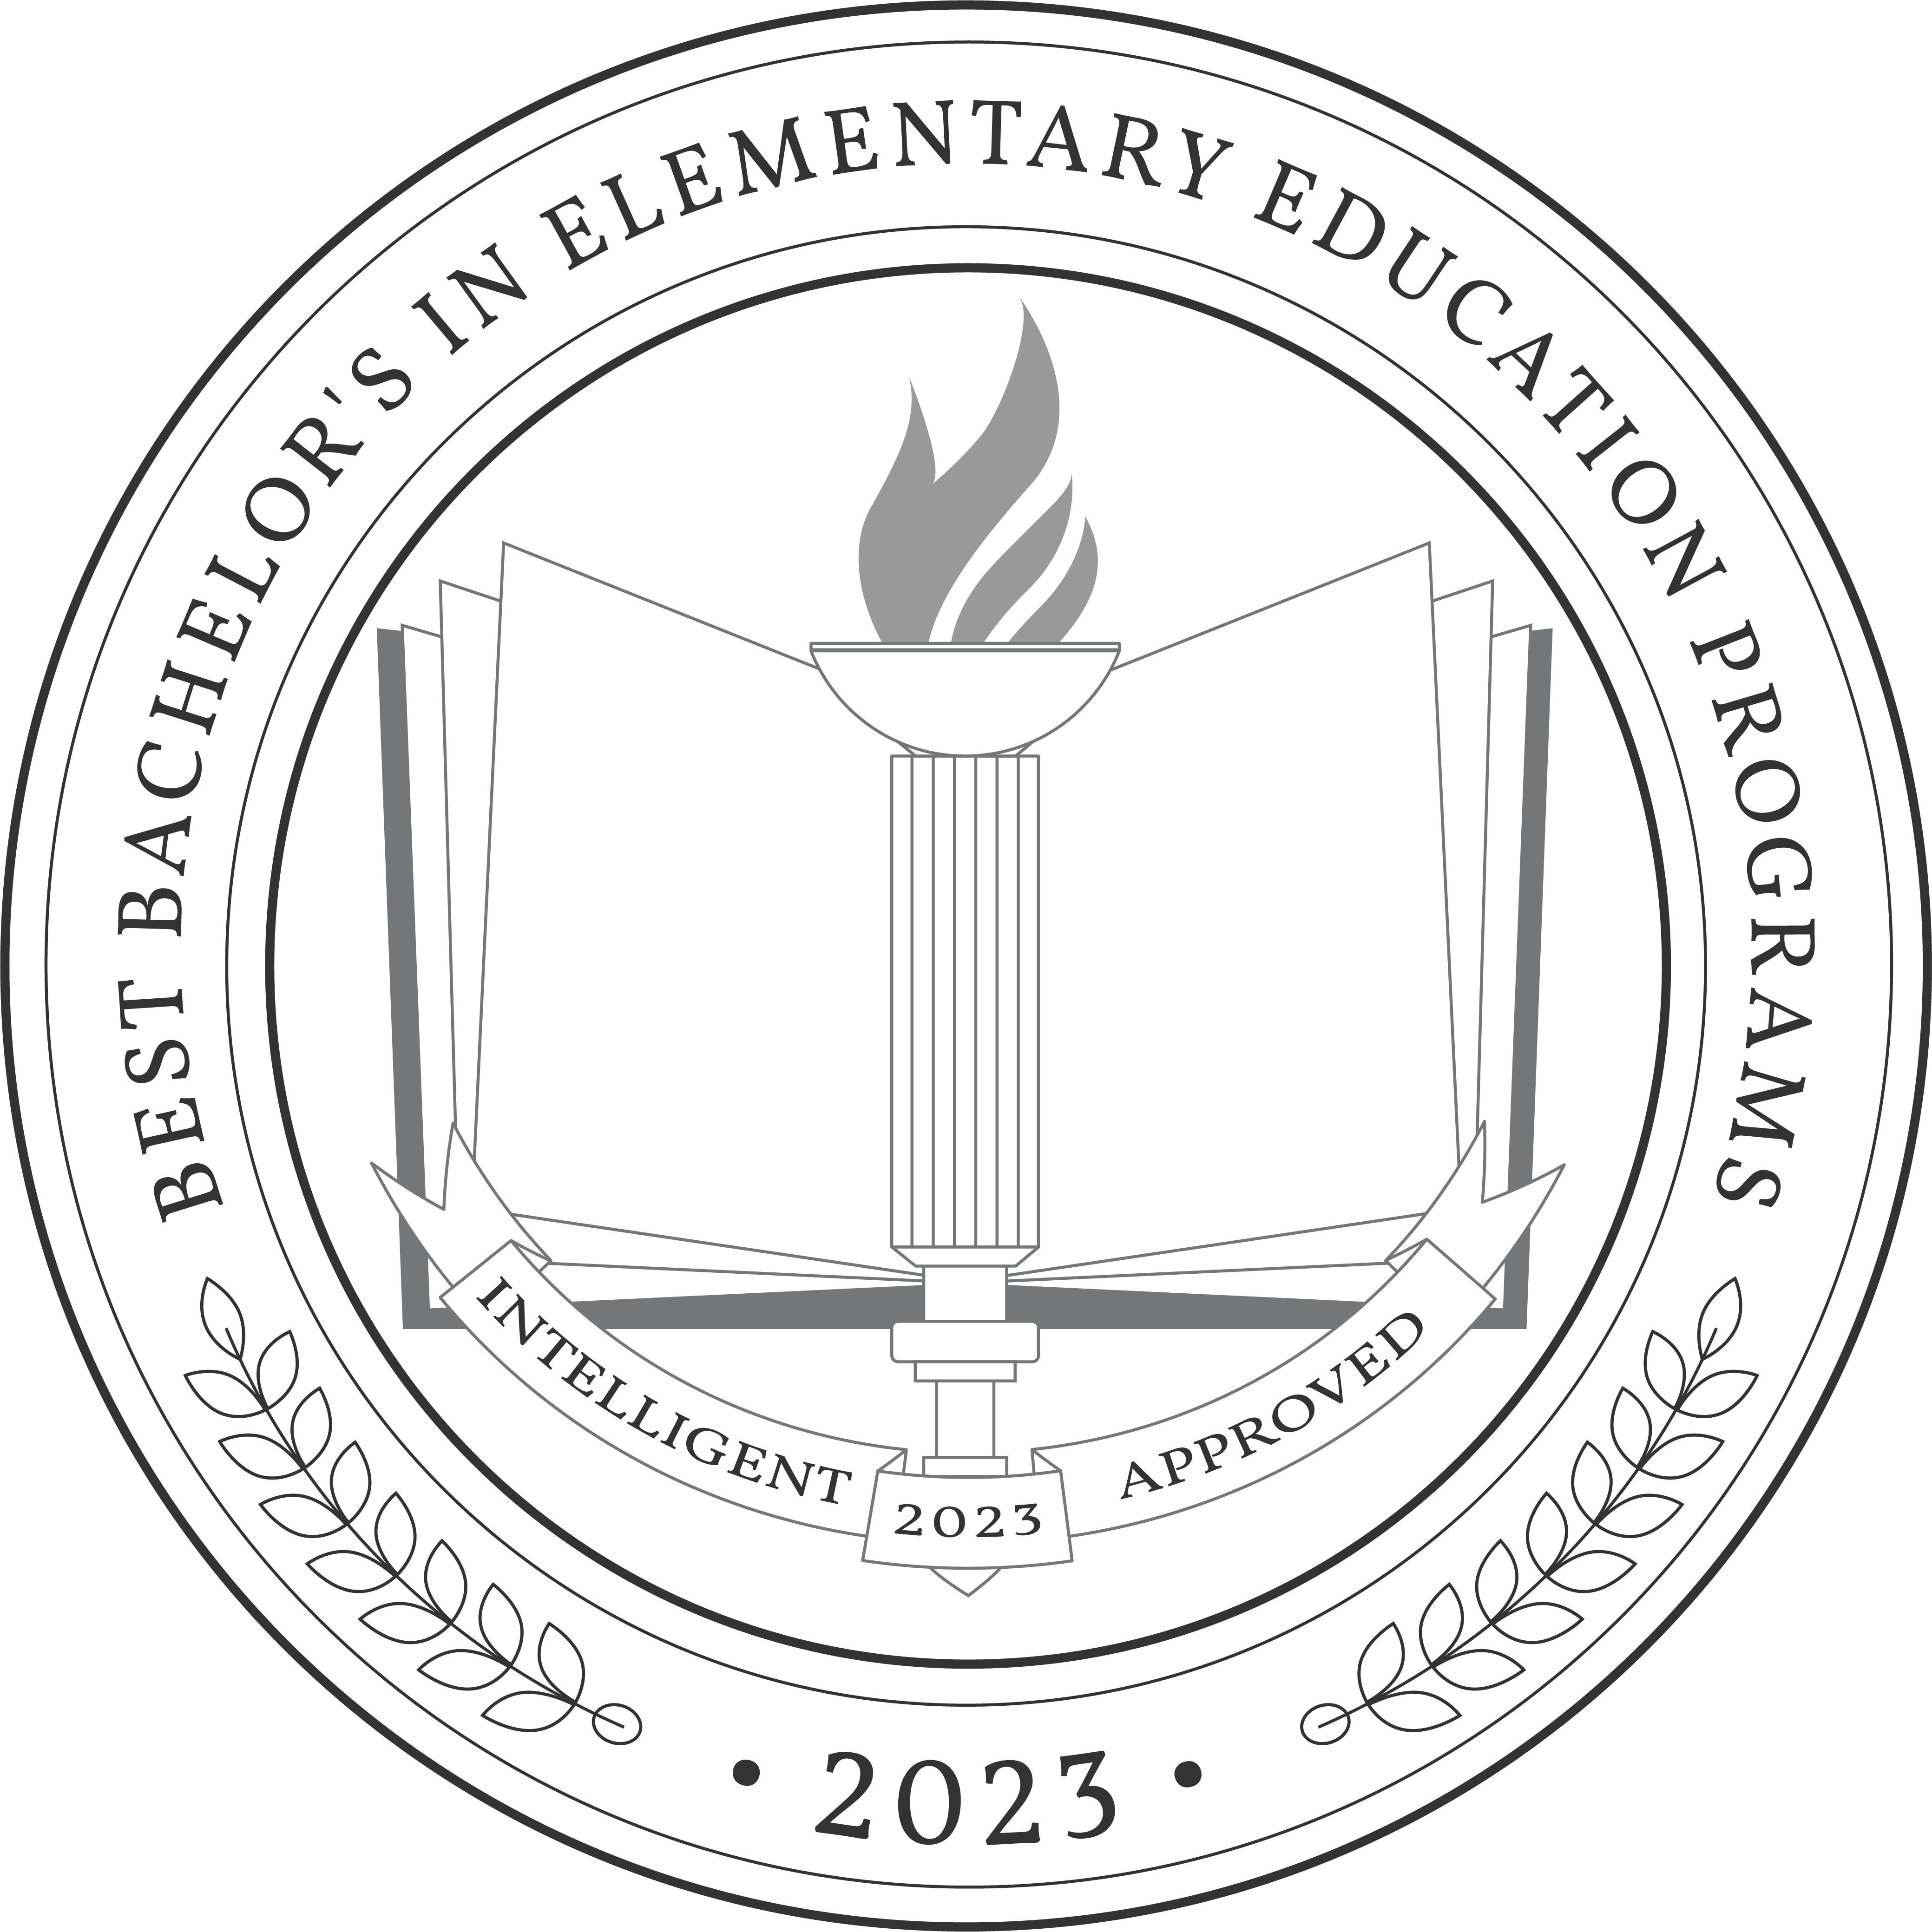 Best Bachelor's in Elementary Education Programs 2023